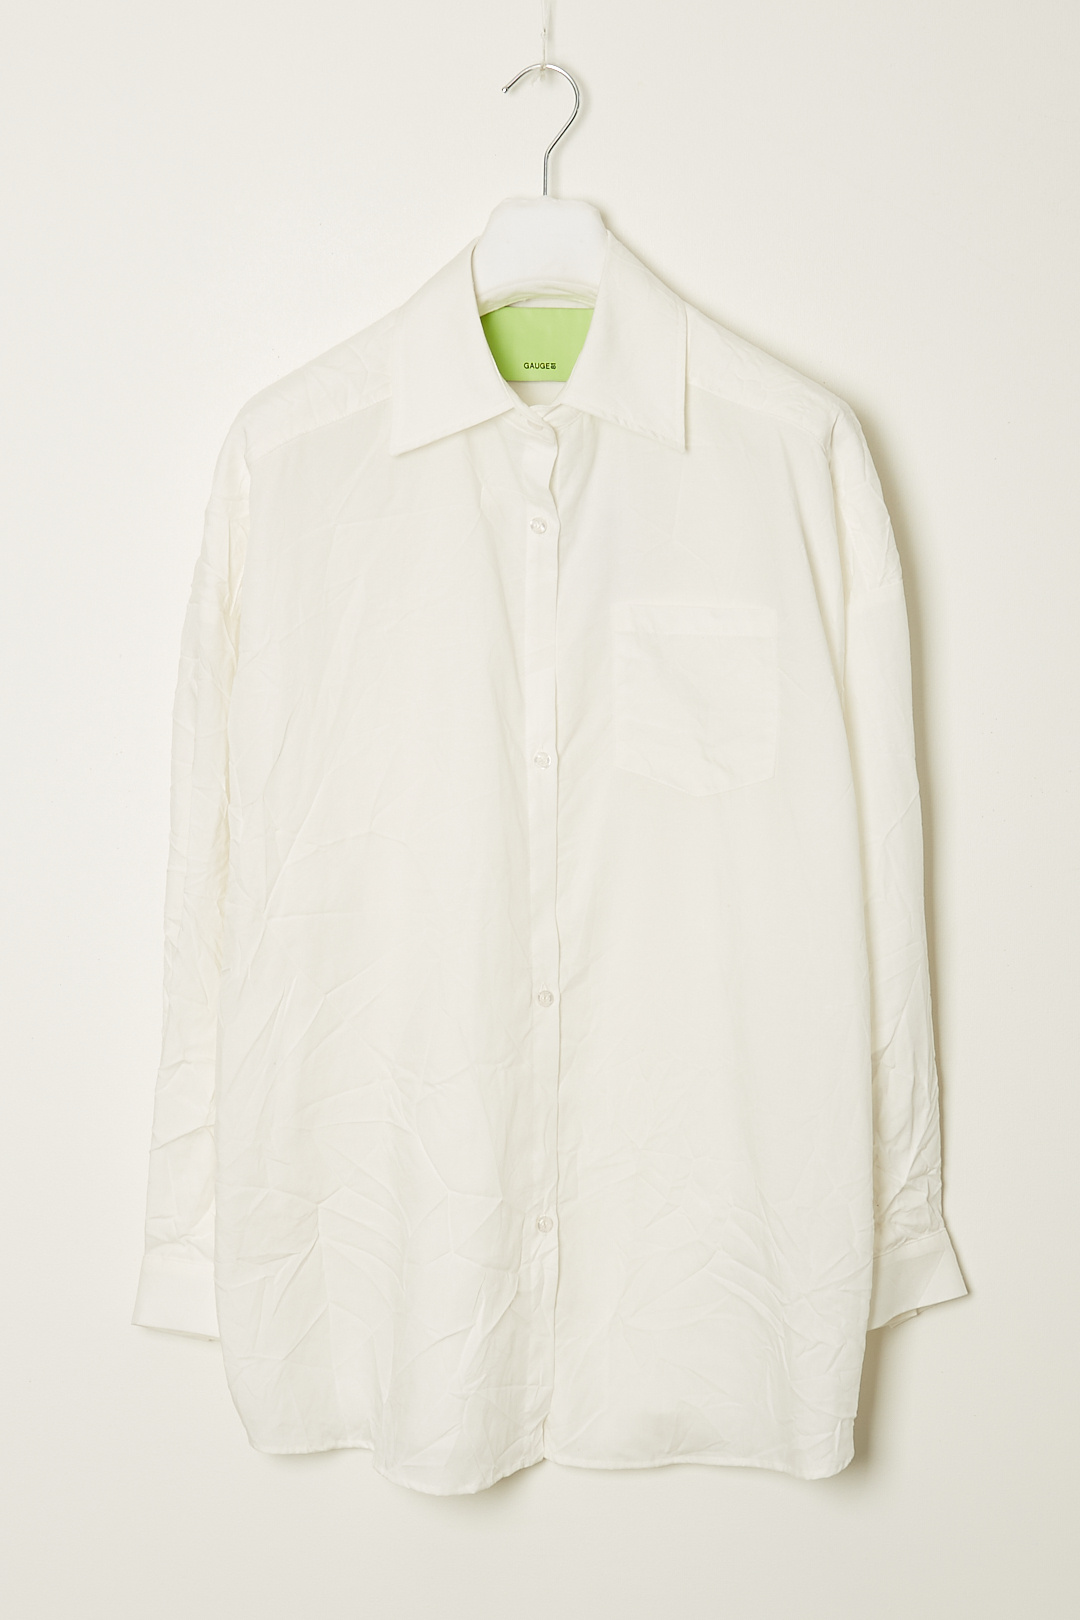 Gauge81 - Bianca shirt linen crinkle